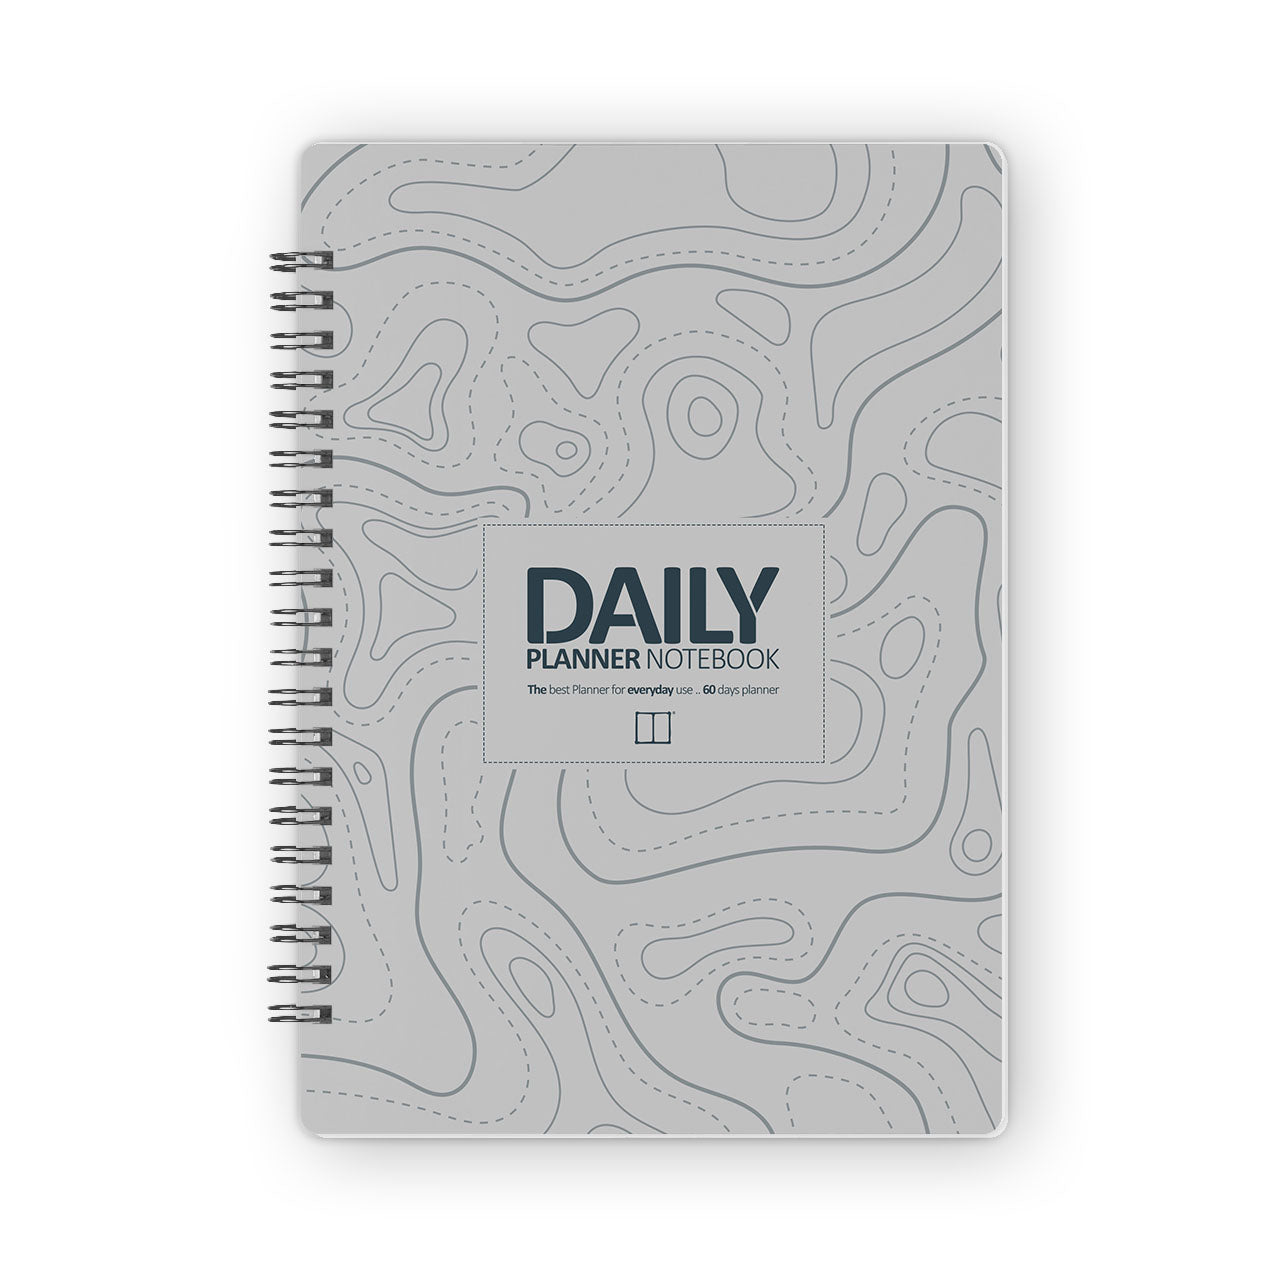 Daily Calendar Planner (60 Days) | 20 X 14 cm - Contour (Grey) SketchBook Stationery